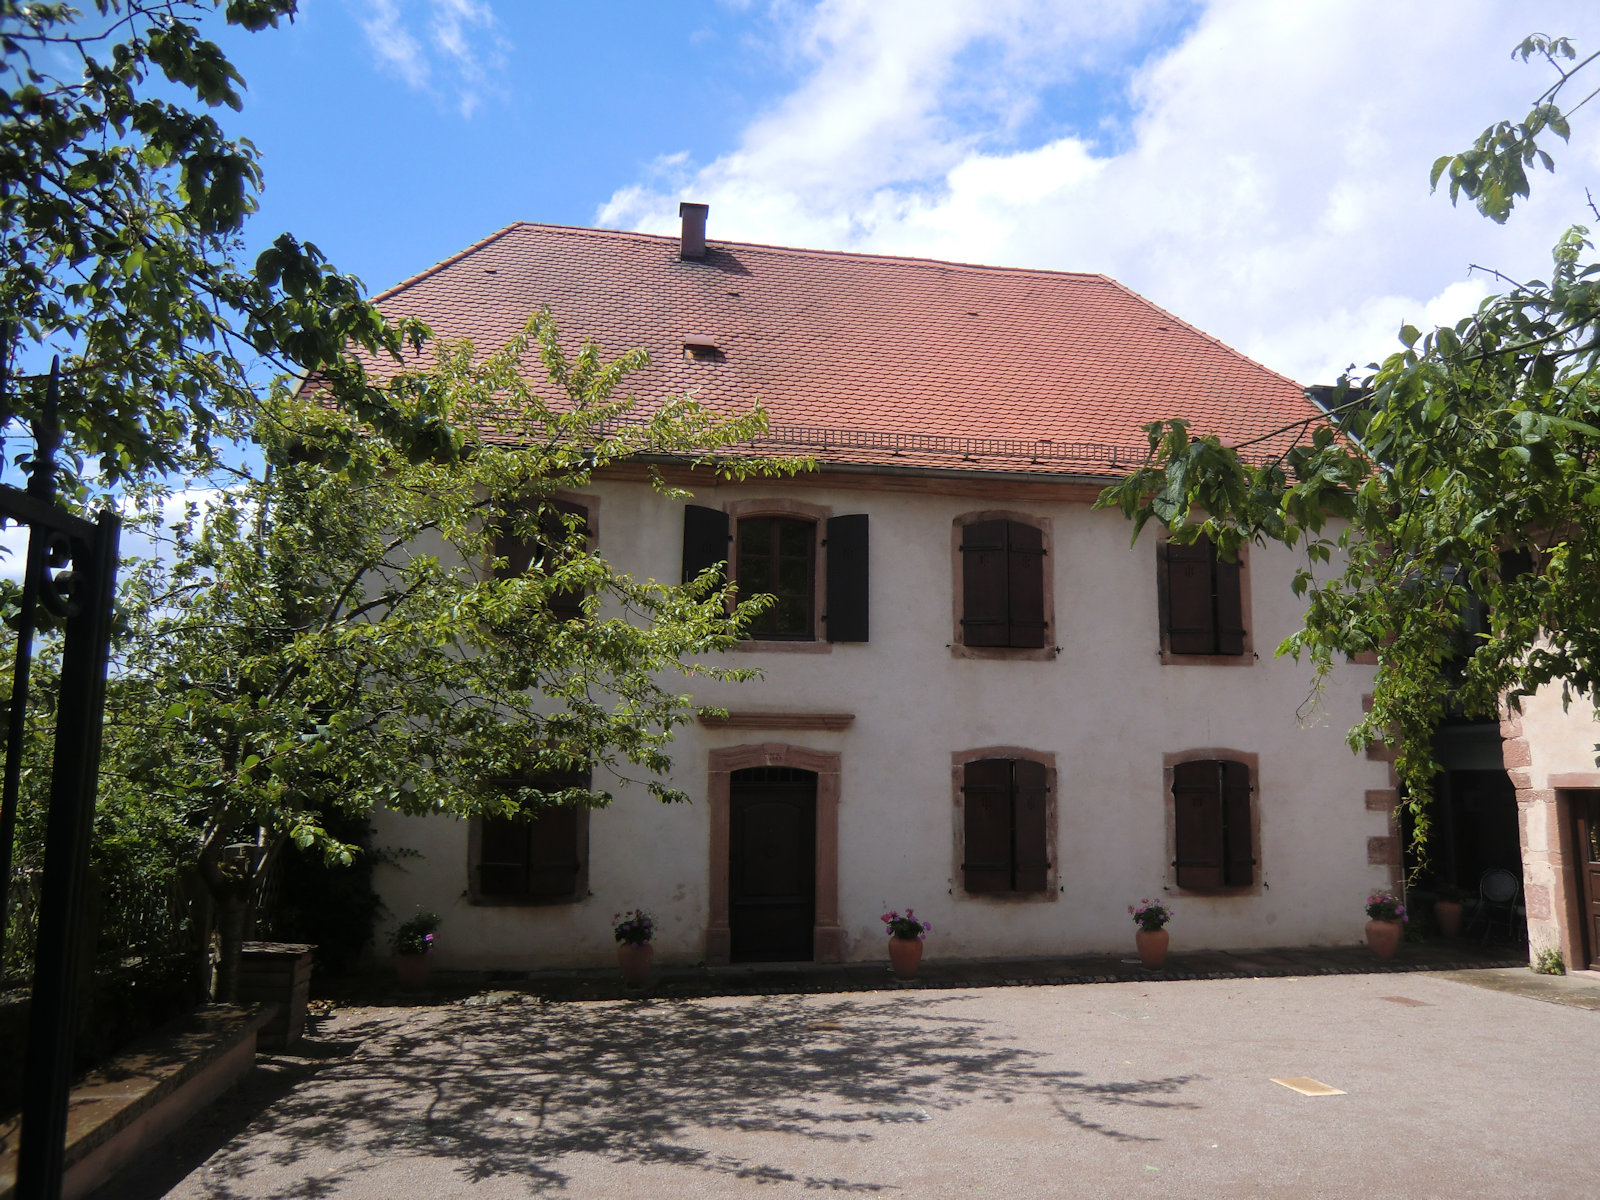 Pfarrhaus in Waldersbach, heute Museum